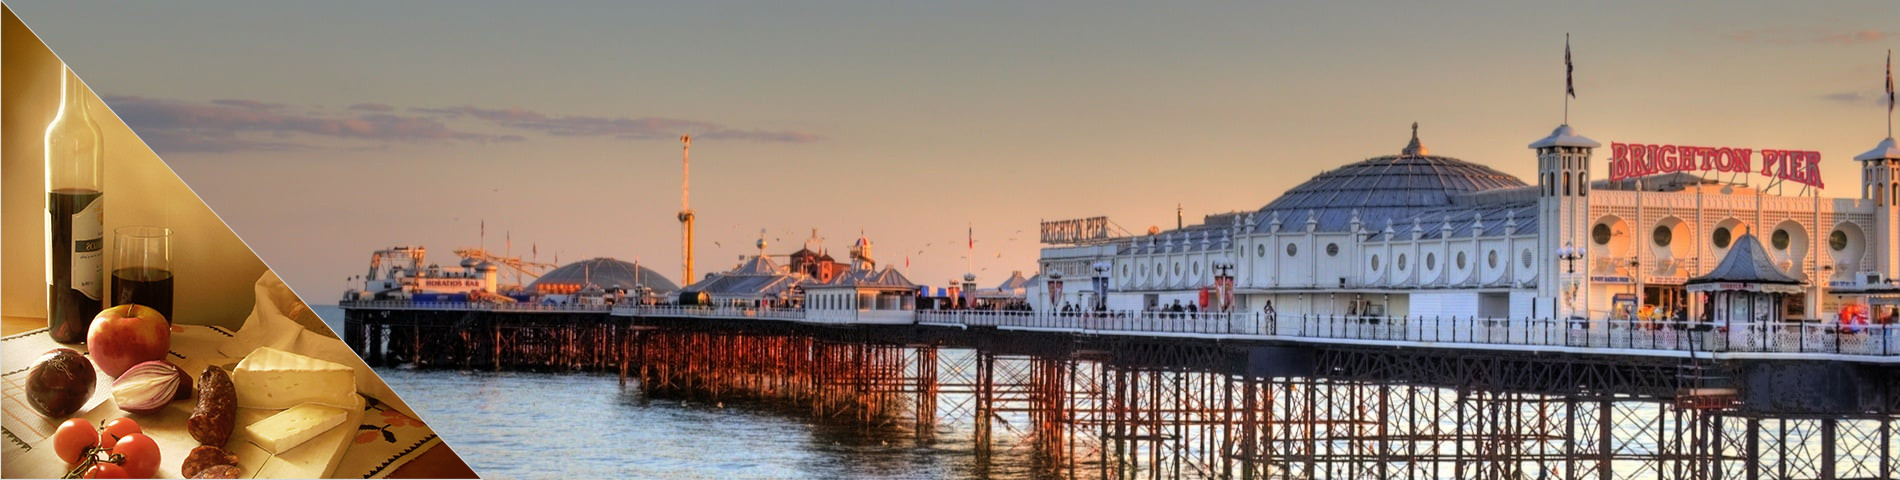 Brighton - Engels & cultuur